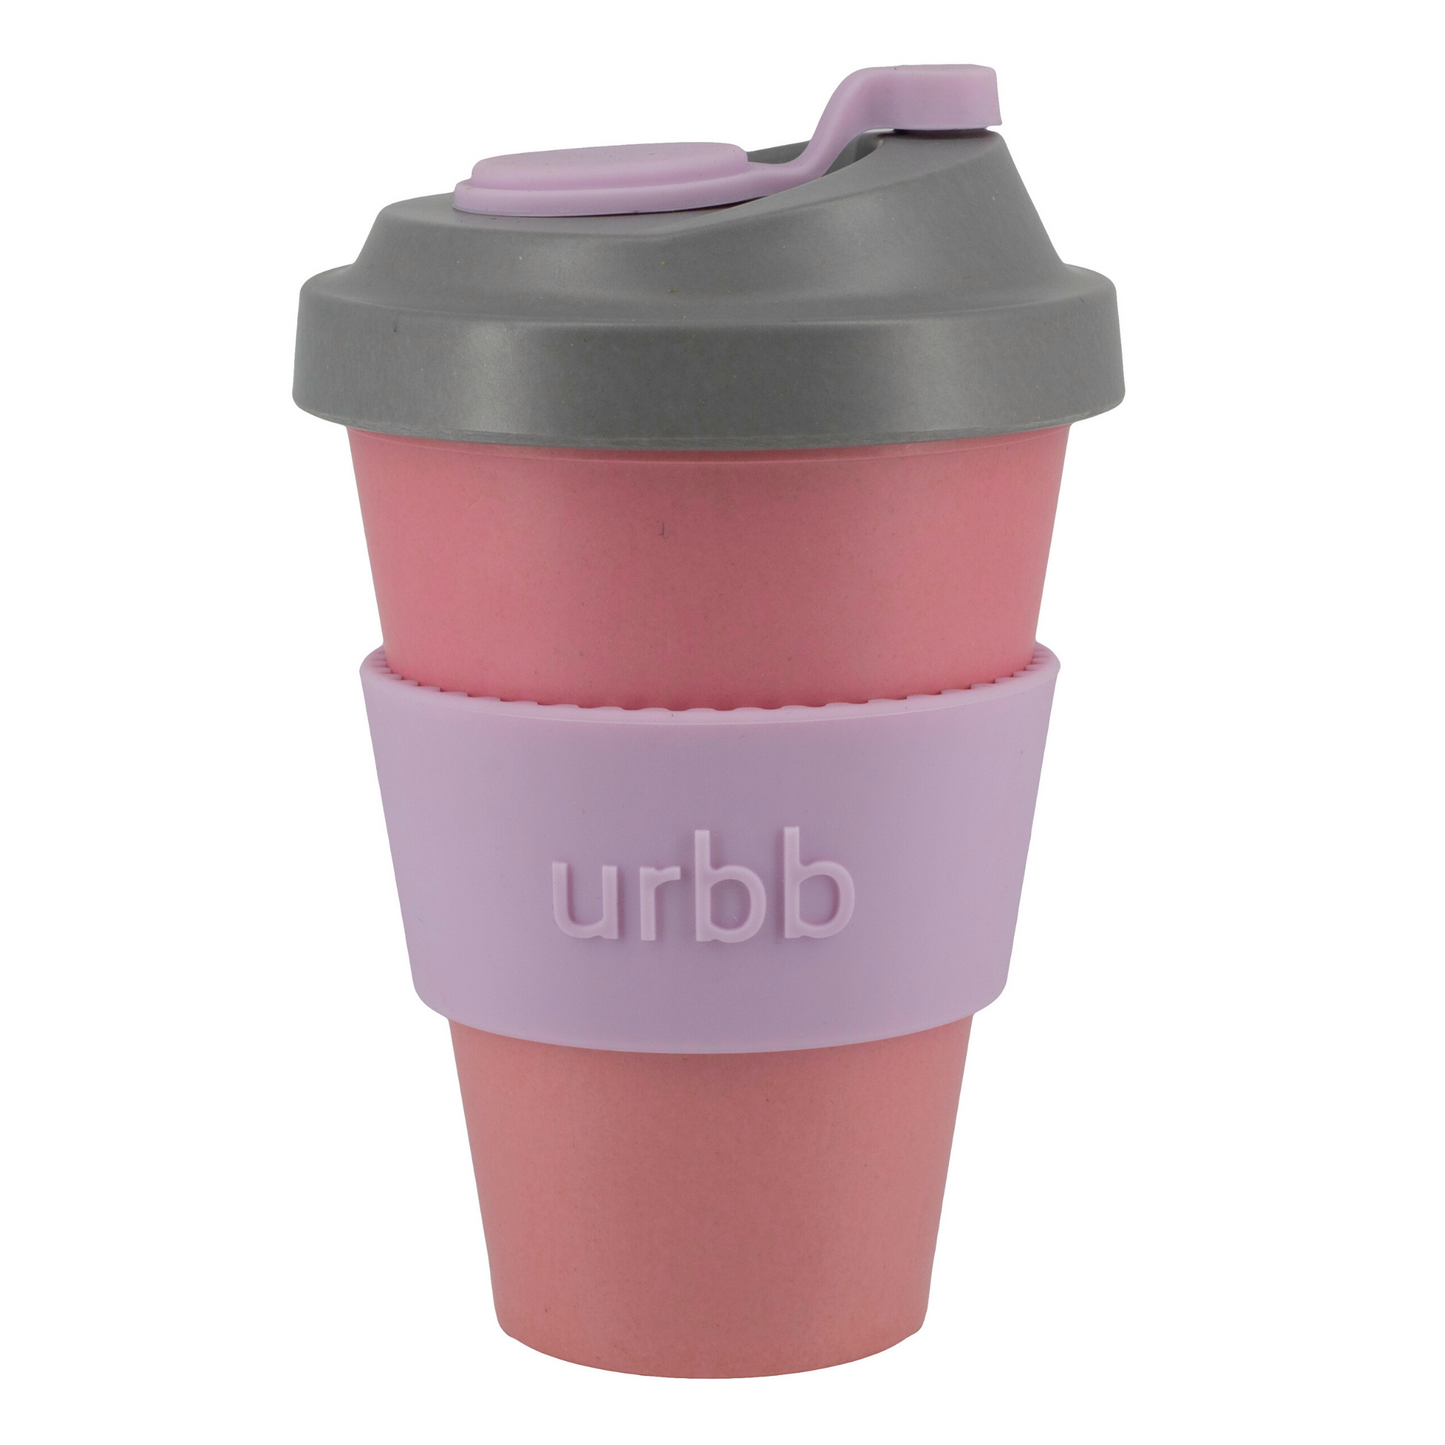 PORTER GREEN - Reusable Coffee Urbb Cup | Vienna